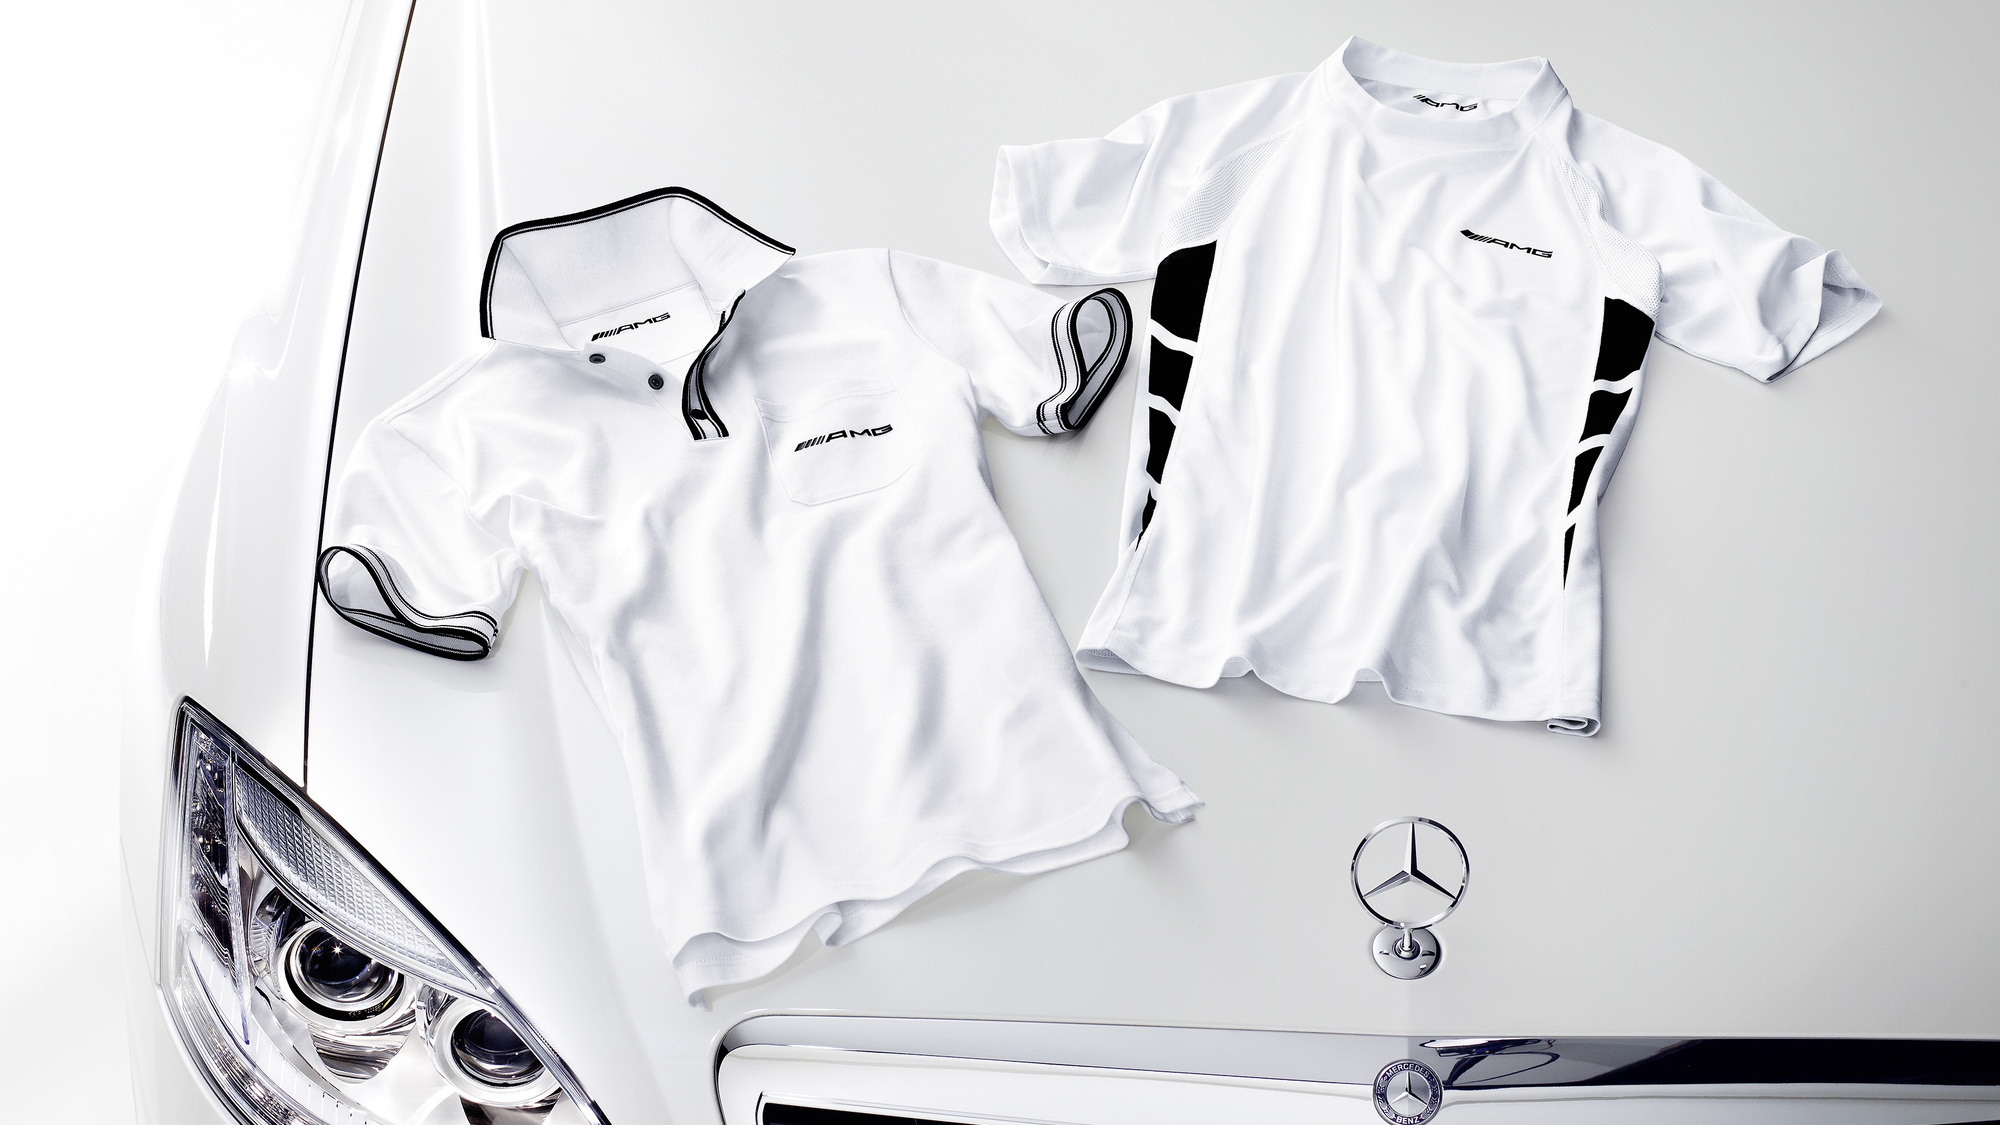 Mercedes-Benz AMG accessory range